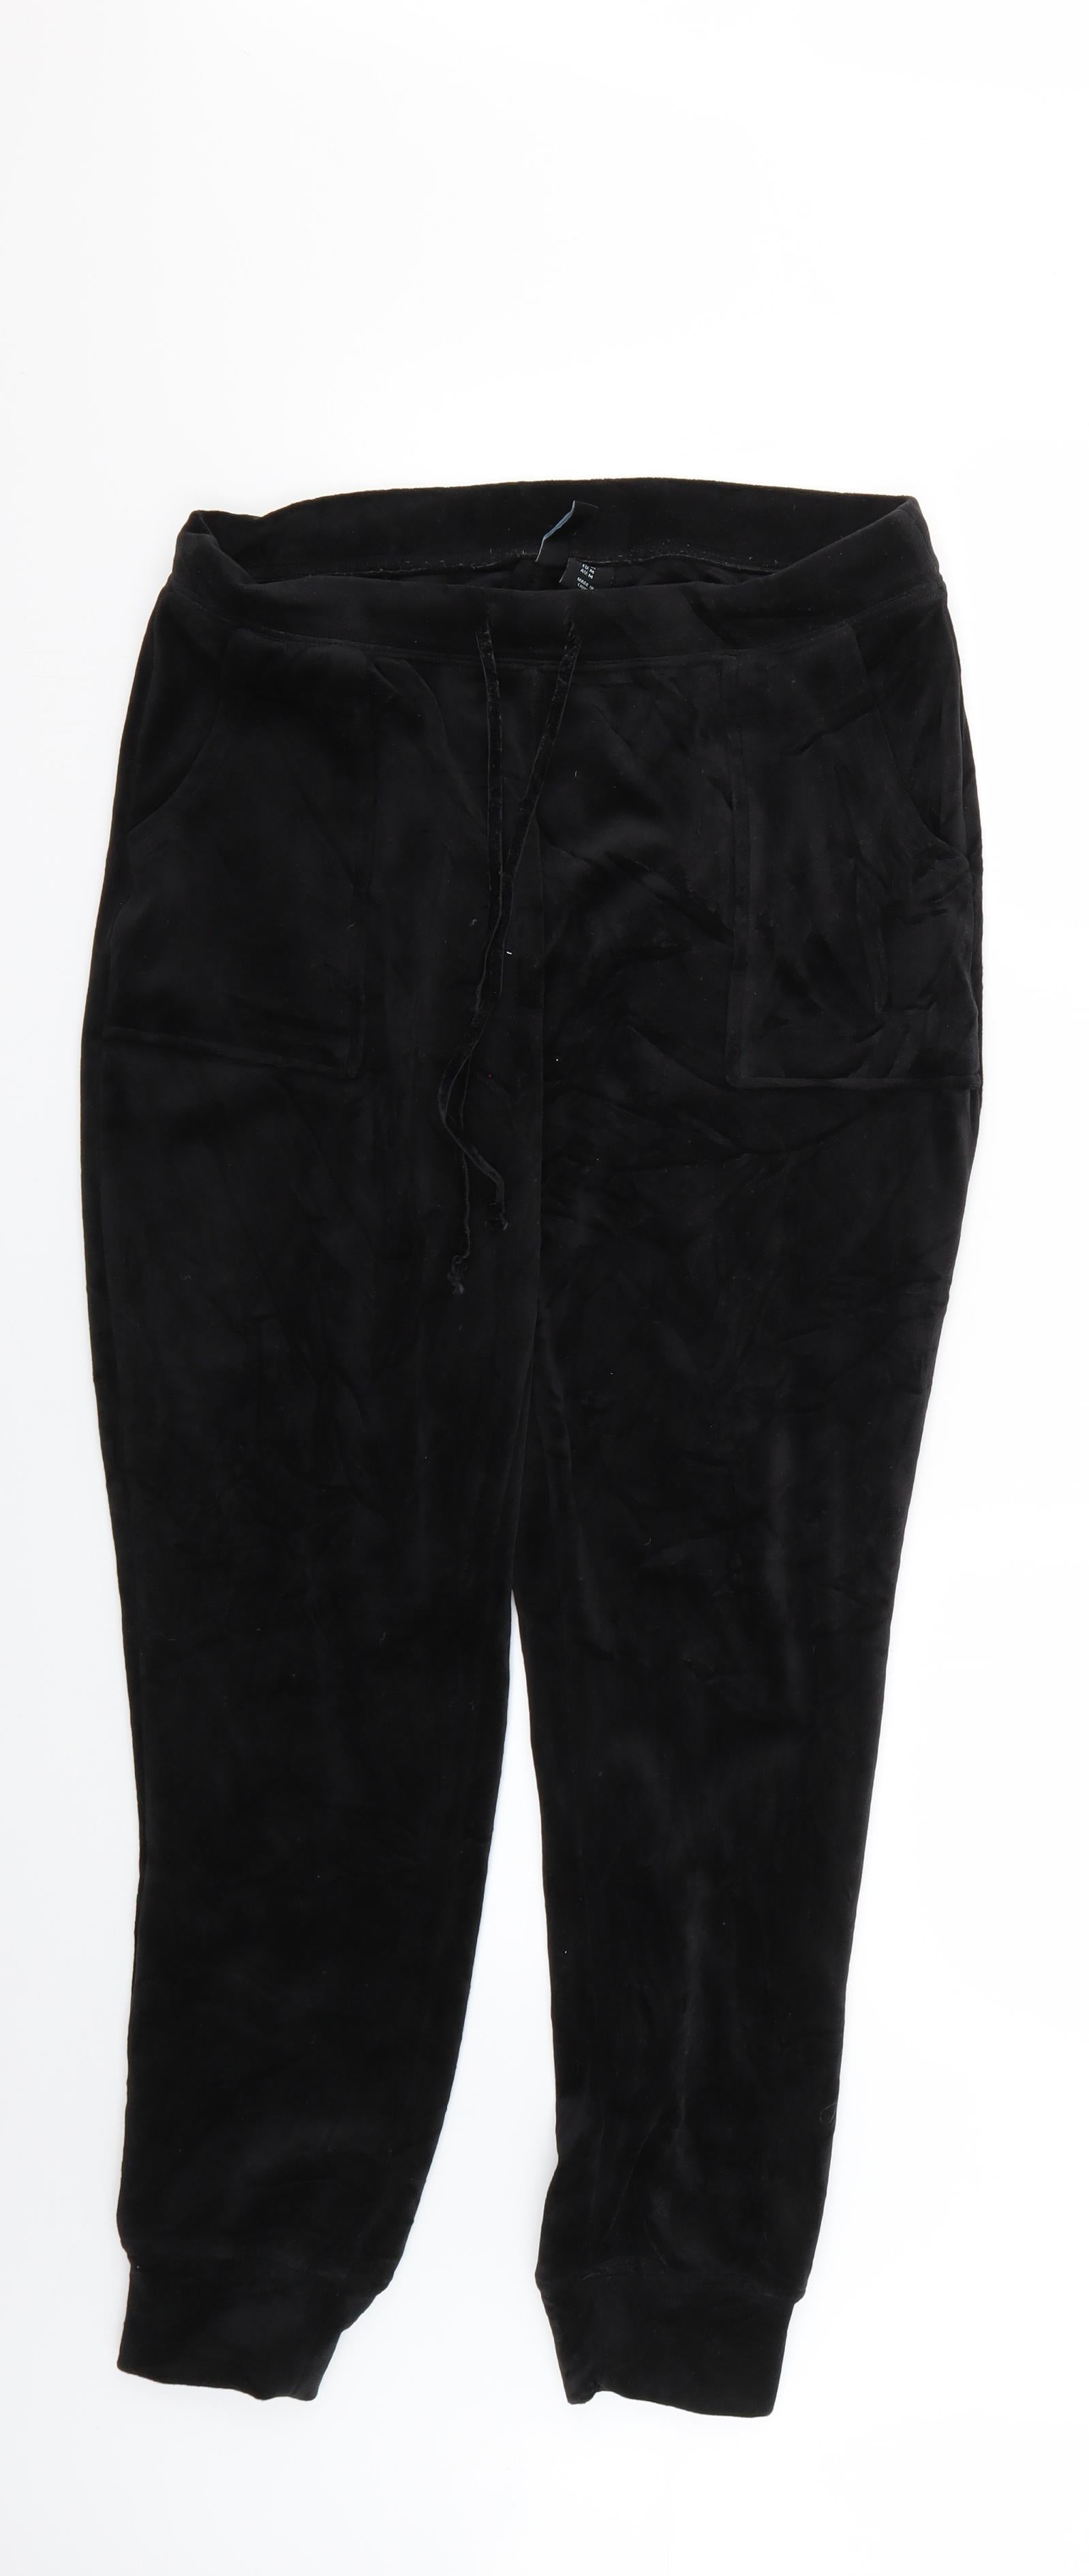 Cynthia Rowley Capri Pants Women's 2 Black Regular Fit Pockets